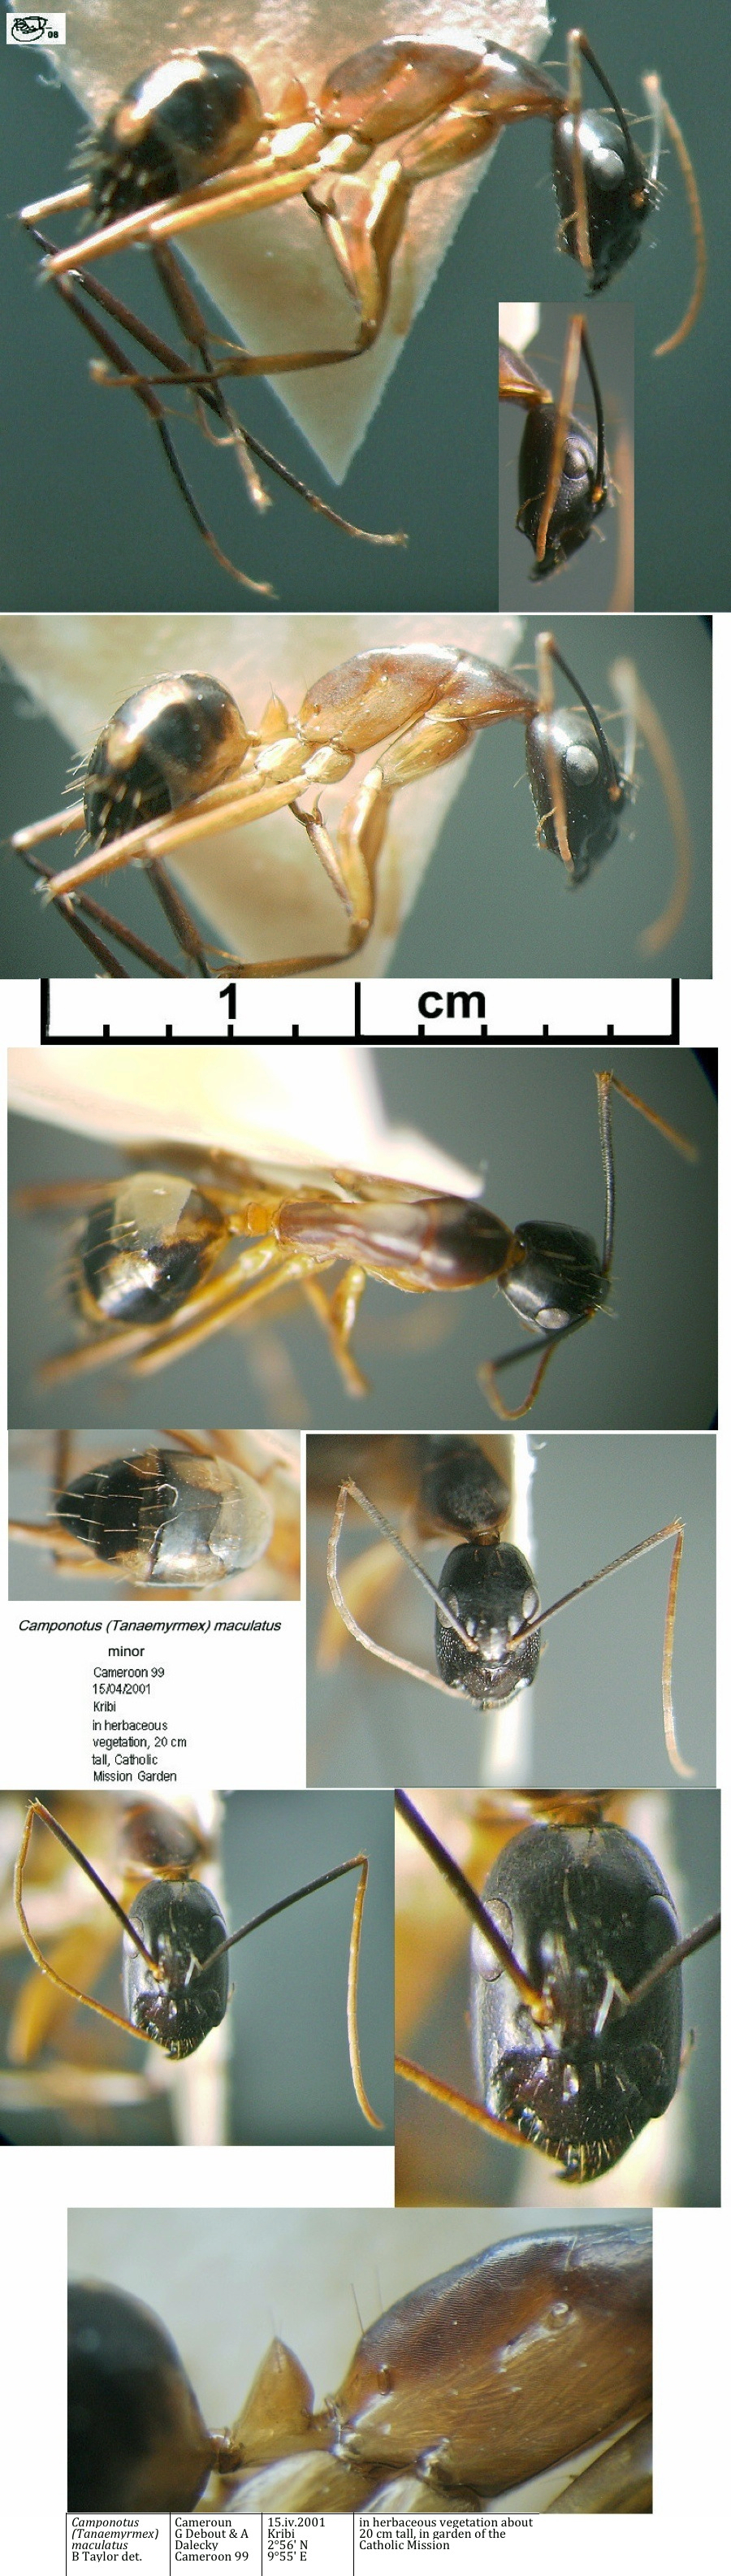 {Camponotus maculatus minor}